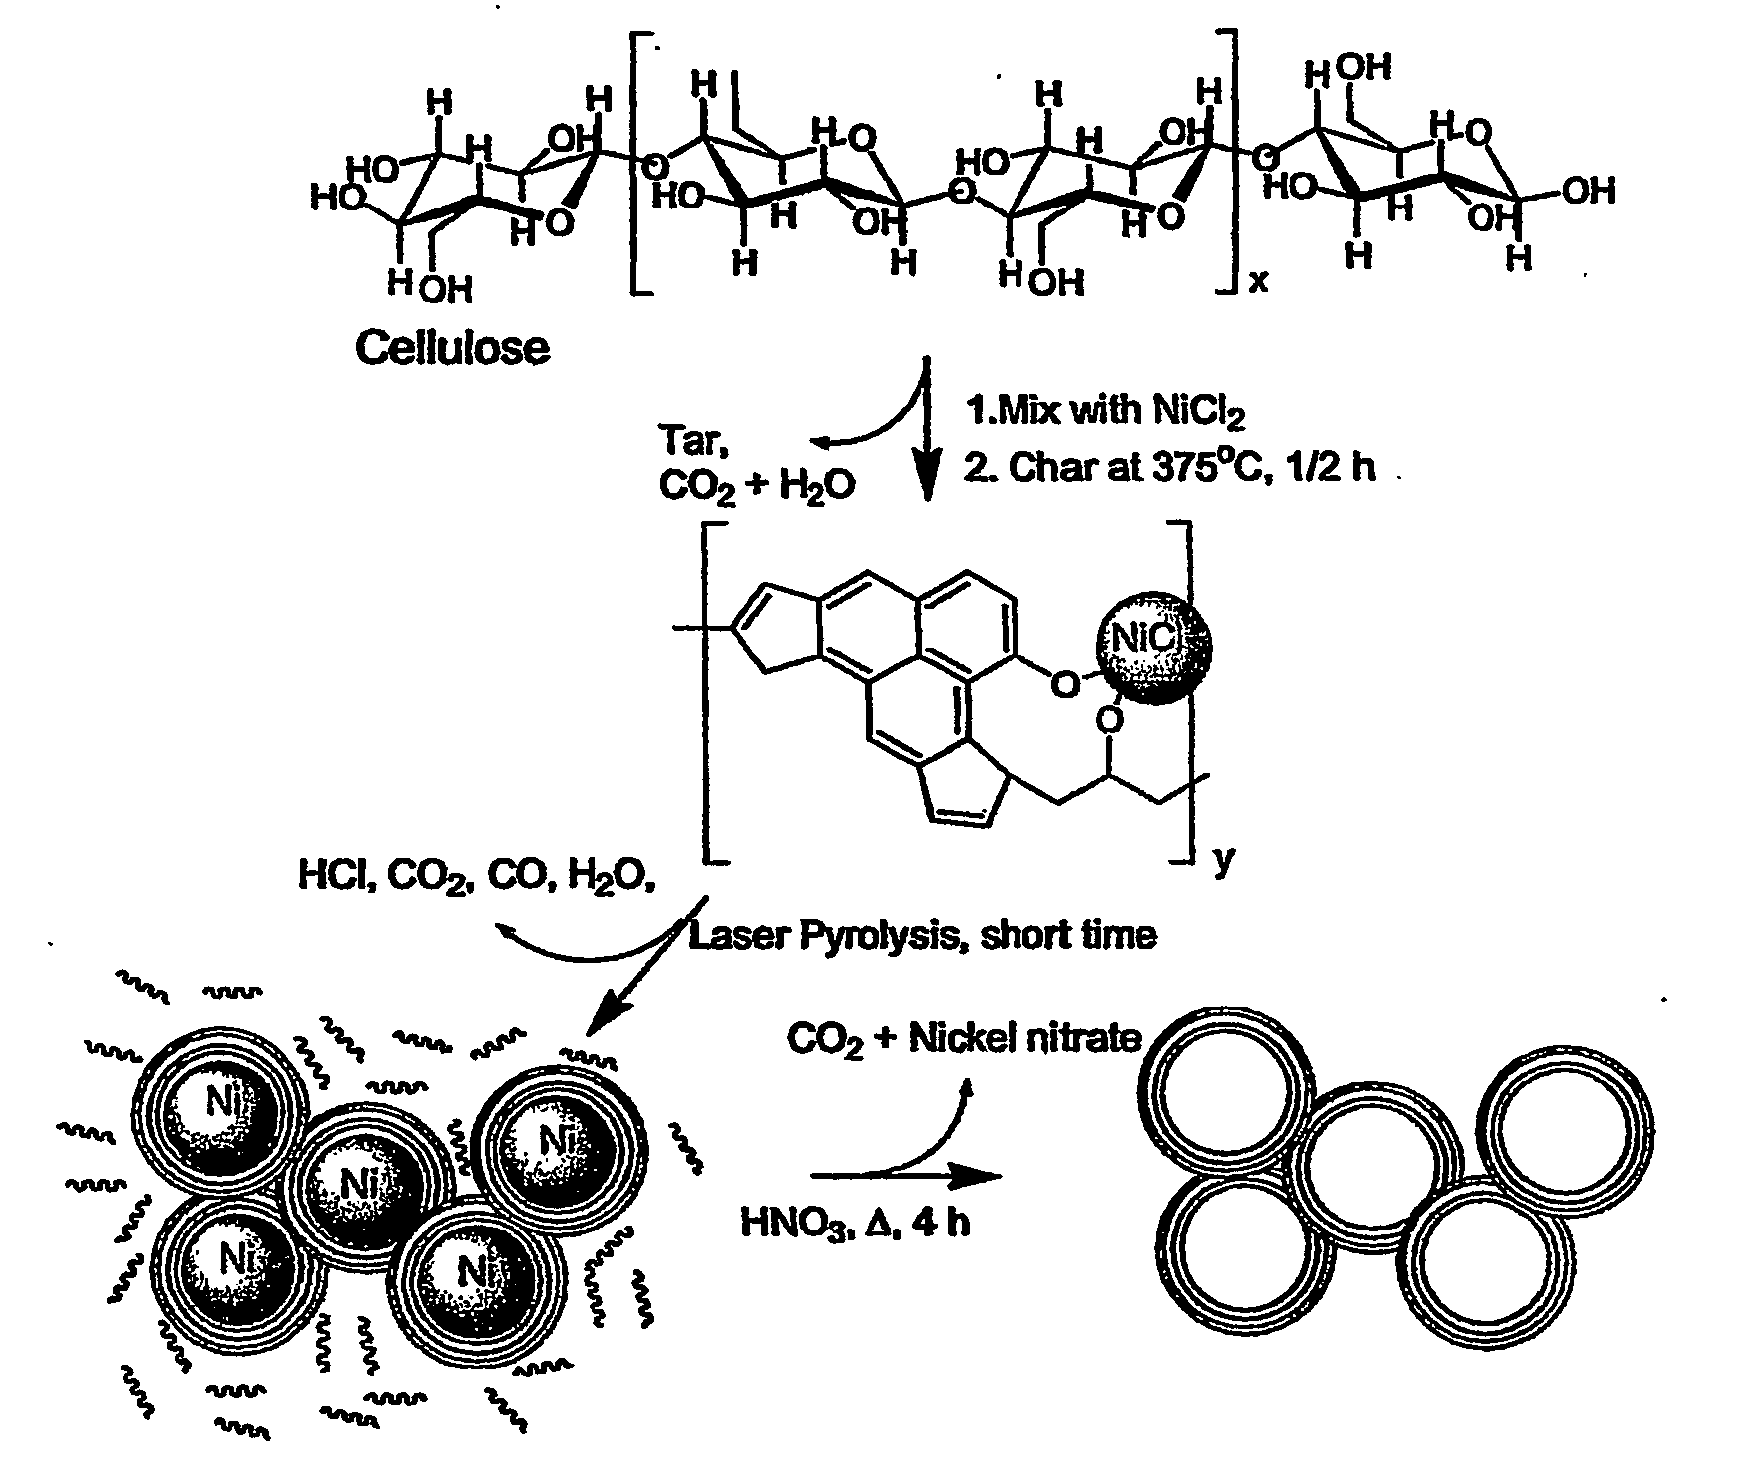 Laser pyrolysis method for producing carbon nano-spheres